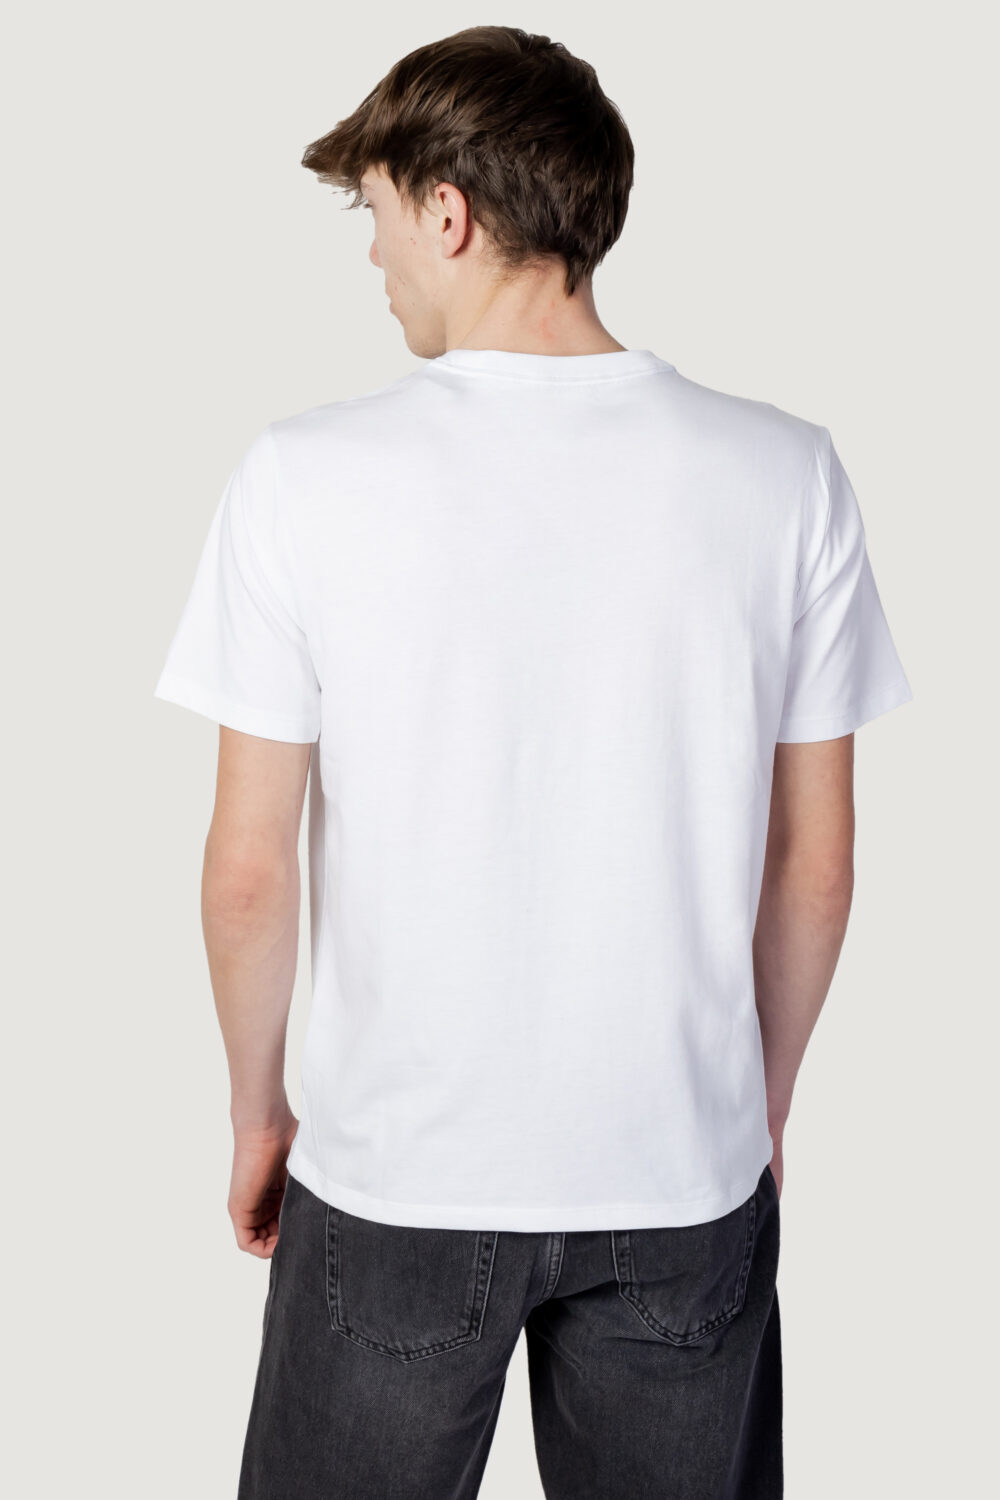 T-shirt Calvin Klein Sport PW - S/S T-Shir Bianco - Foto 4